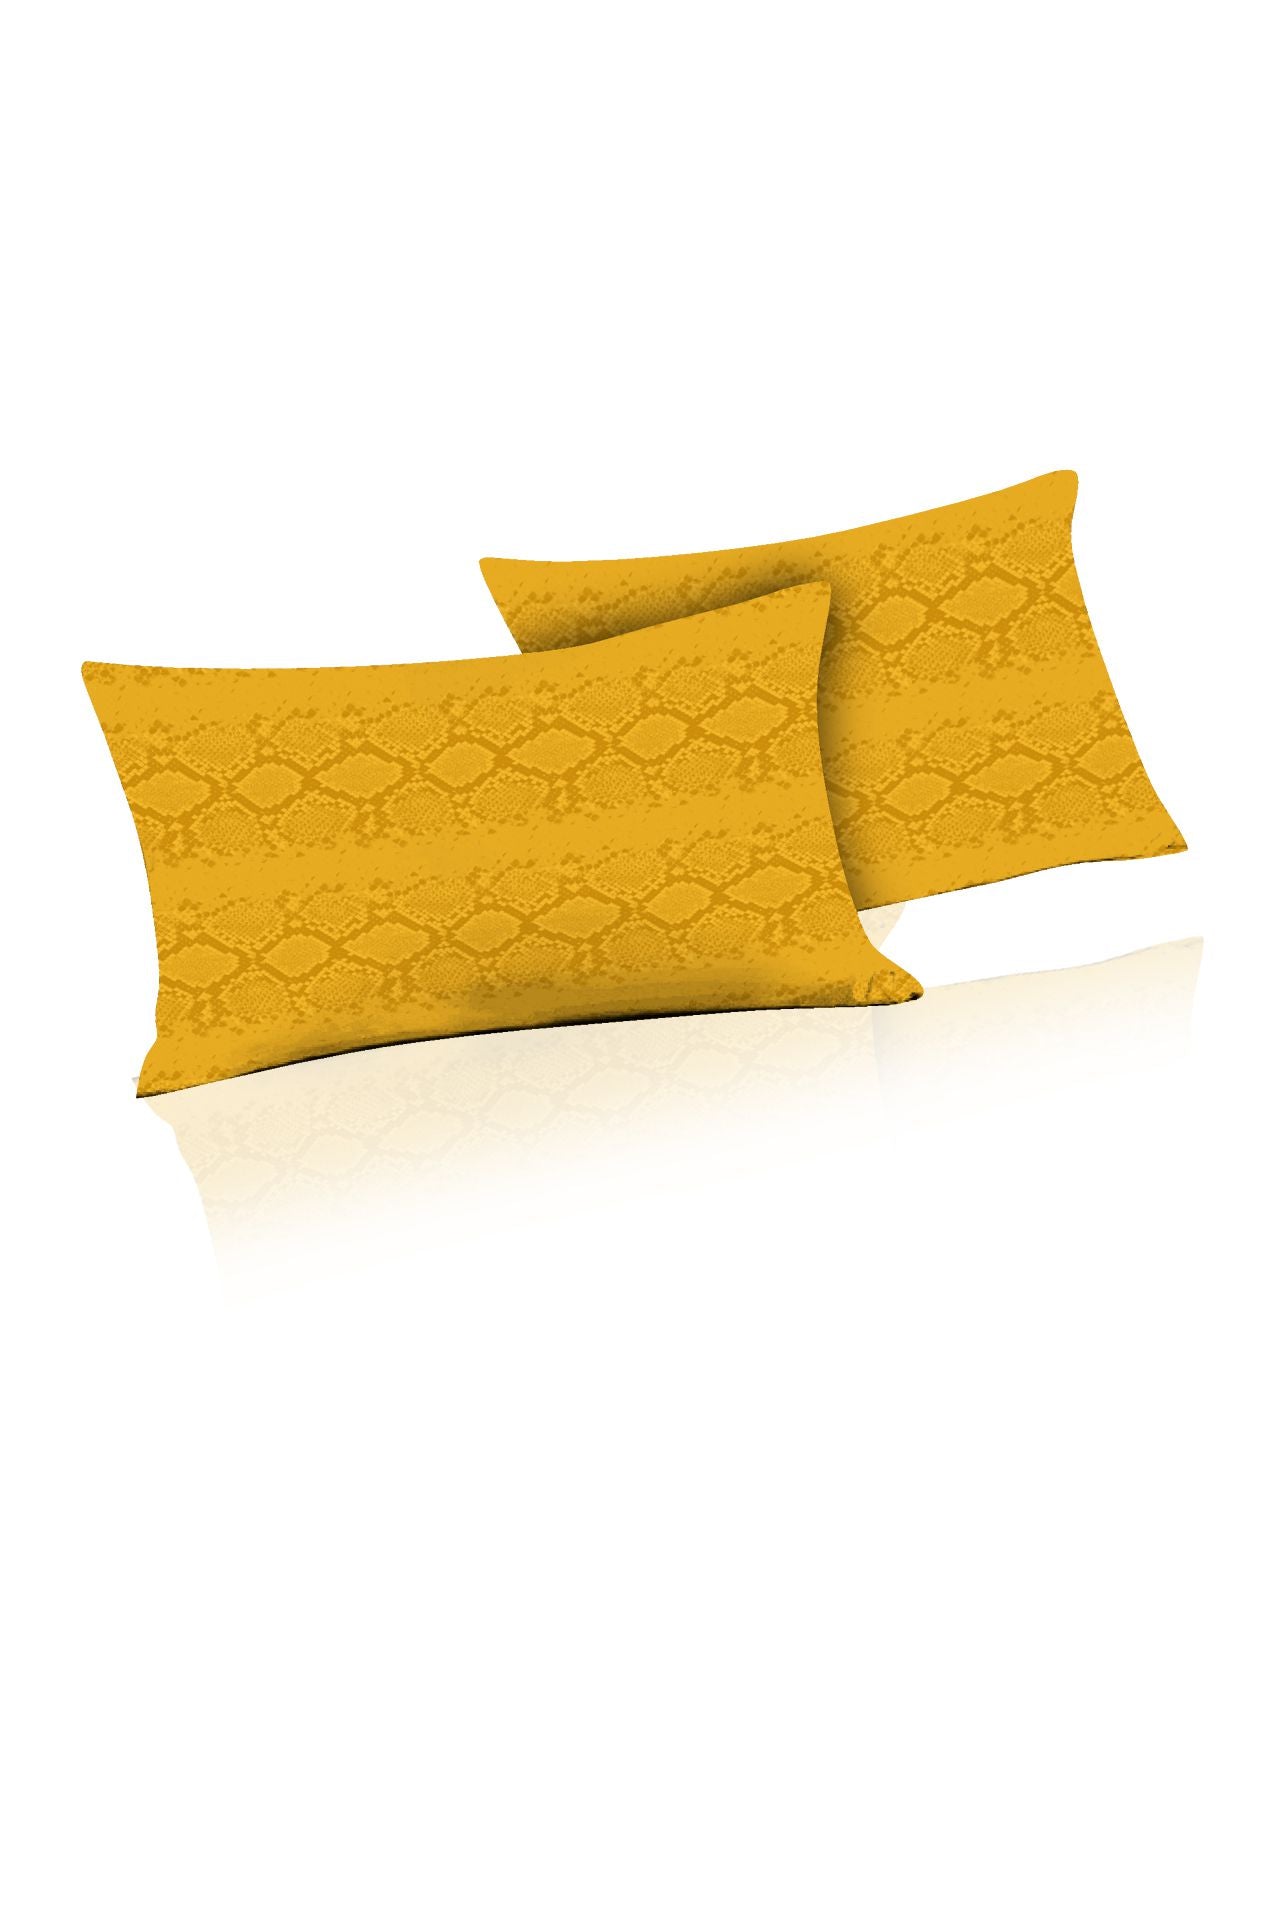 Solid Yellow Pillow Cover Vegan Silk